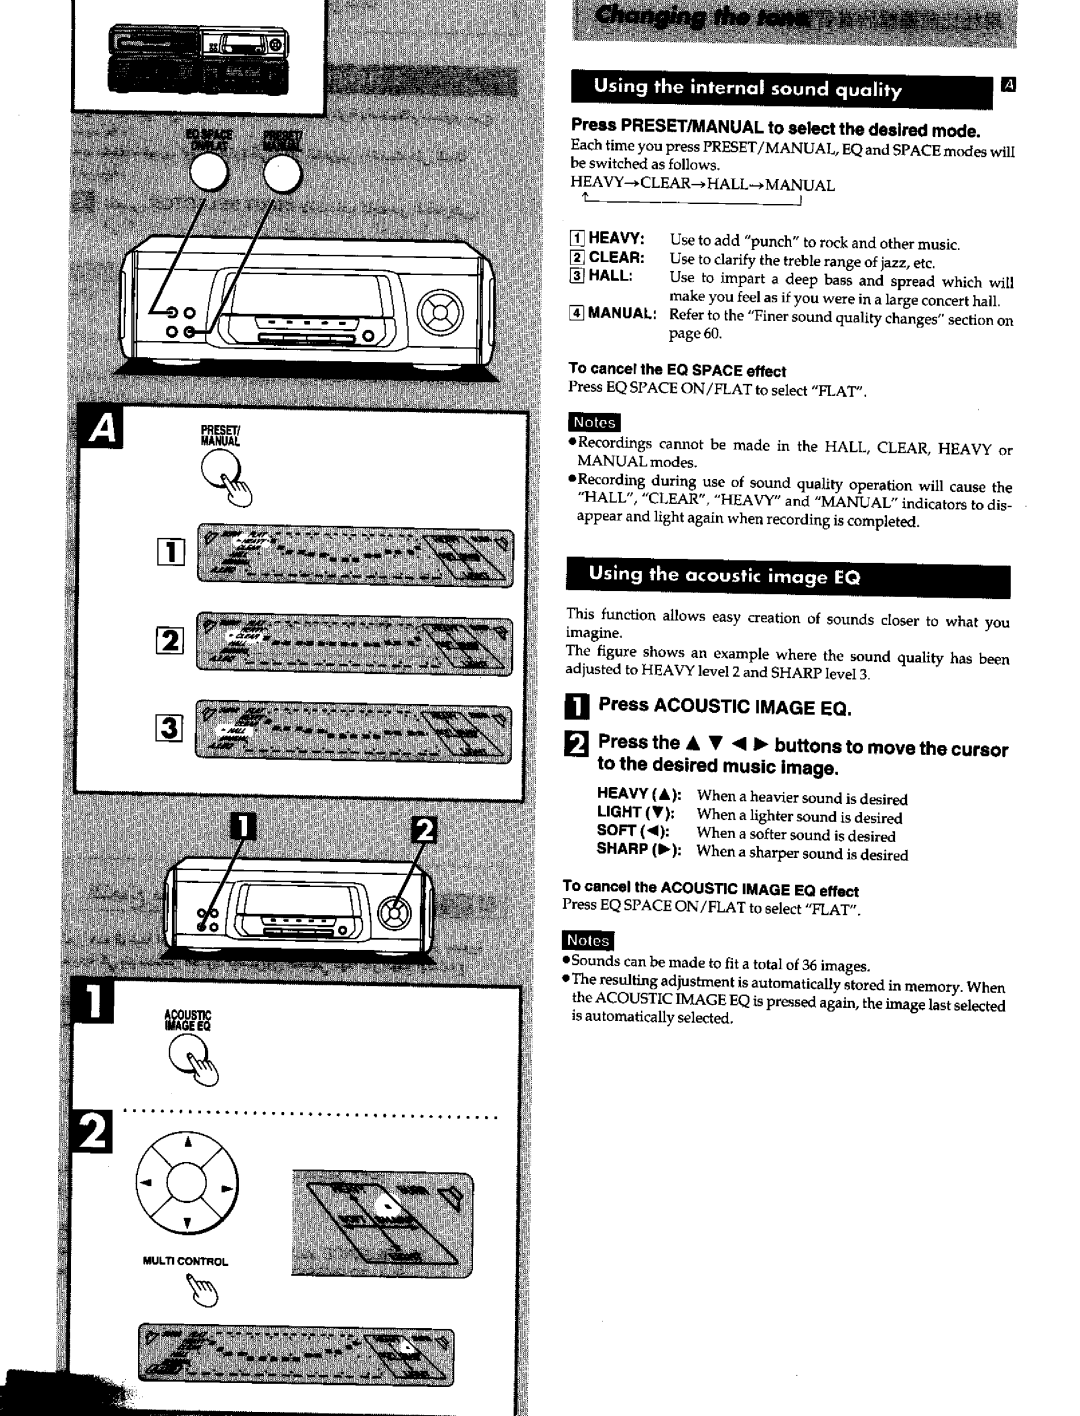 Panasonic SCEH60 manual 